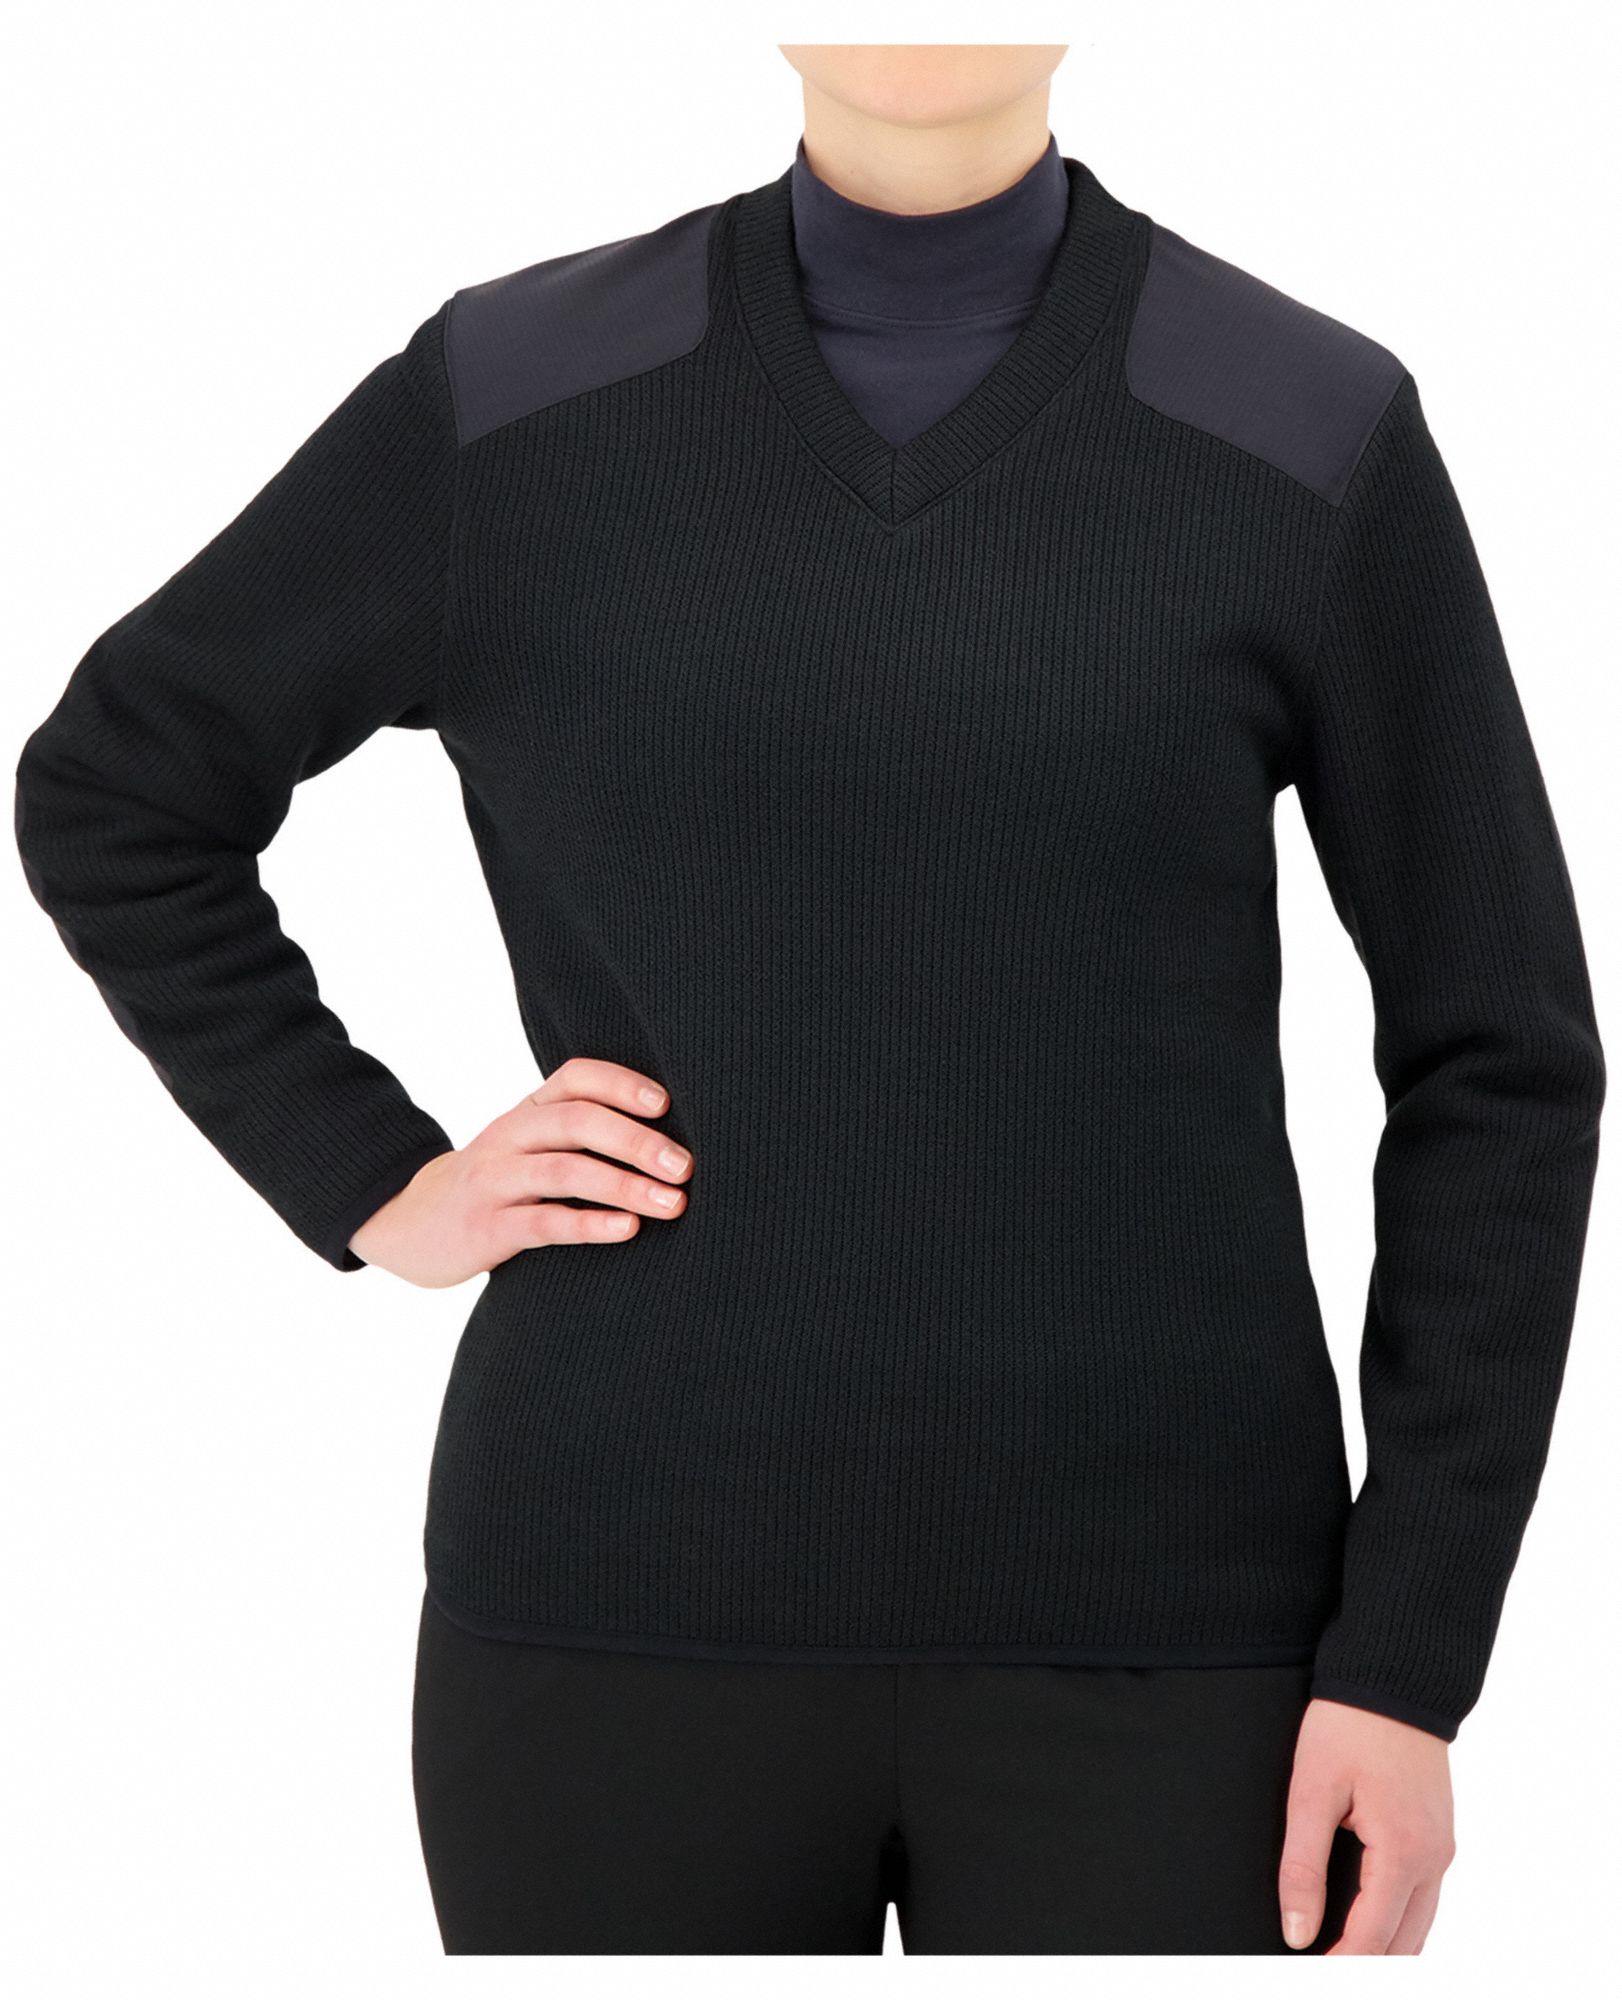 COBMEX, 3XL, 55 in Chest Size, V-Neck Military Sweater - Grainger